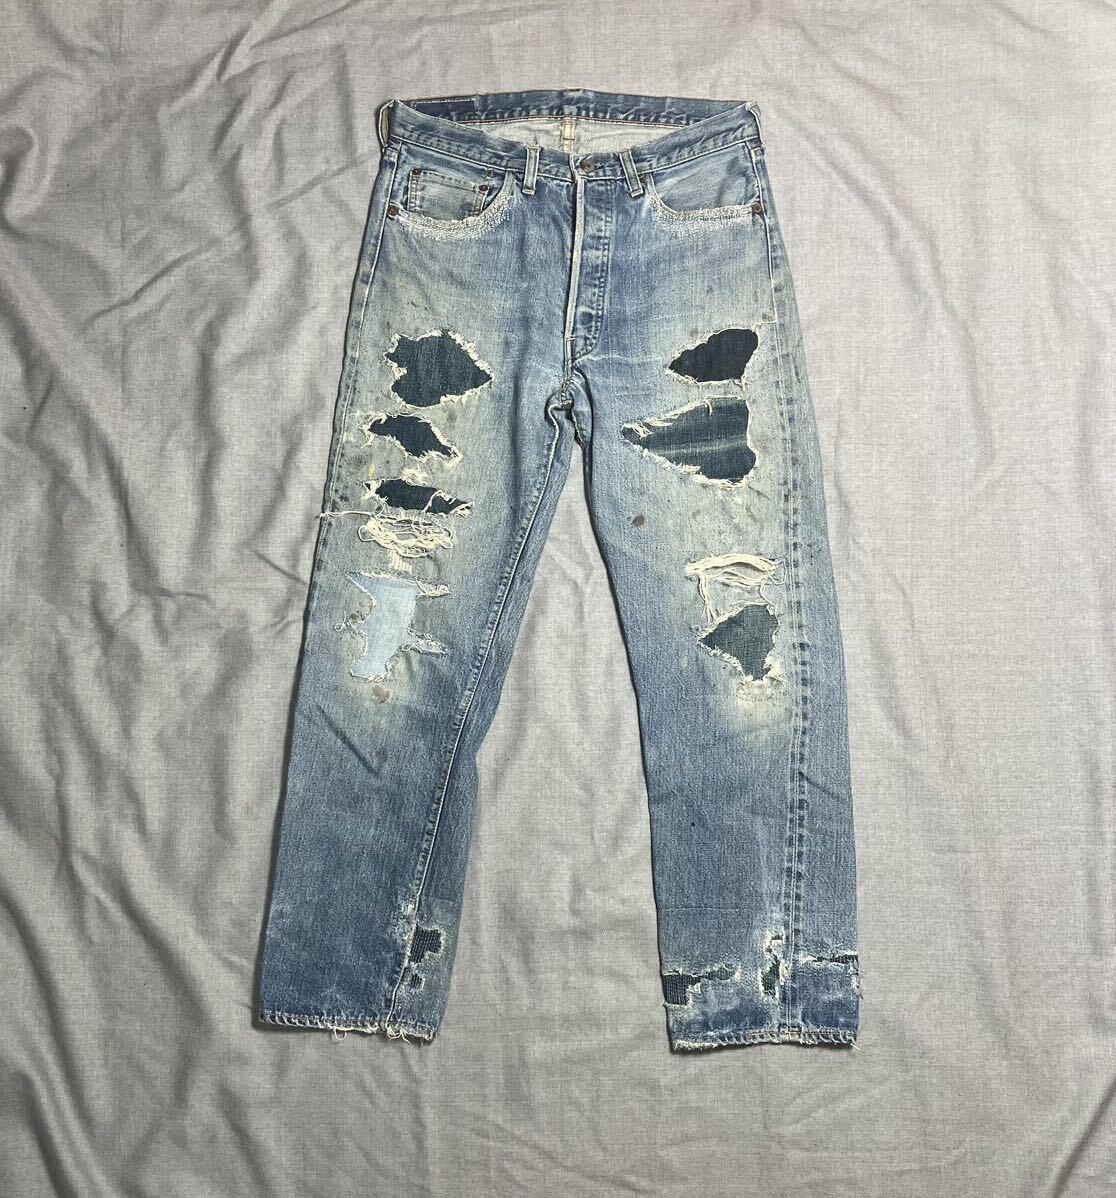  Levi's 501 66 previous term Vintage Denim jeans W34 small e 60s 70s USA made LEVIS 501XX 505 damage repair atmosphere gran ji